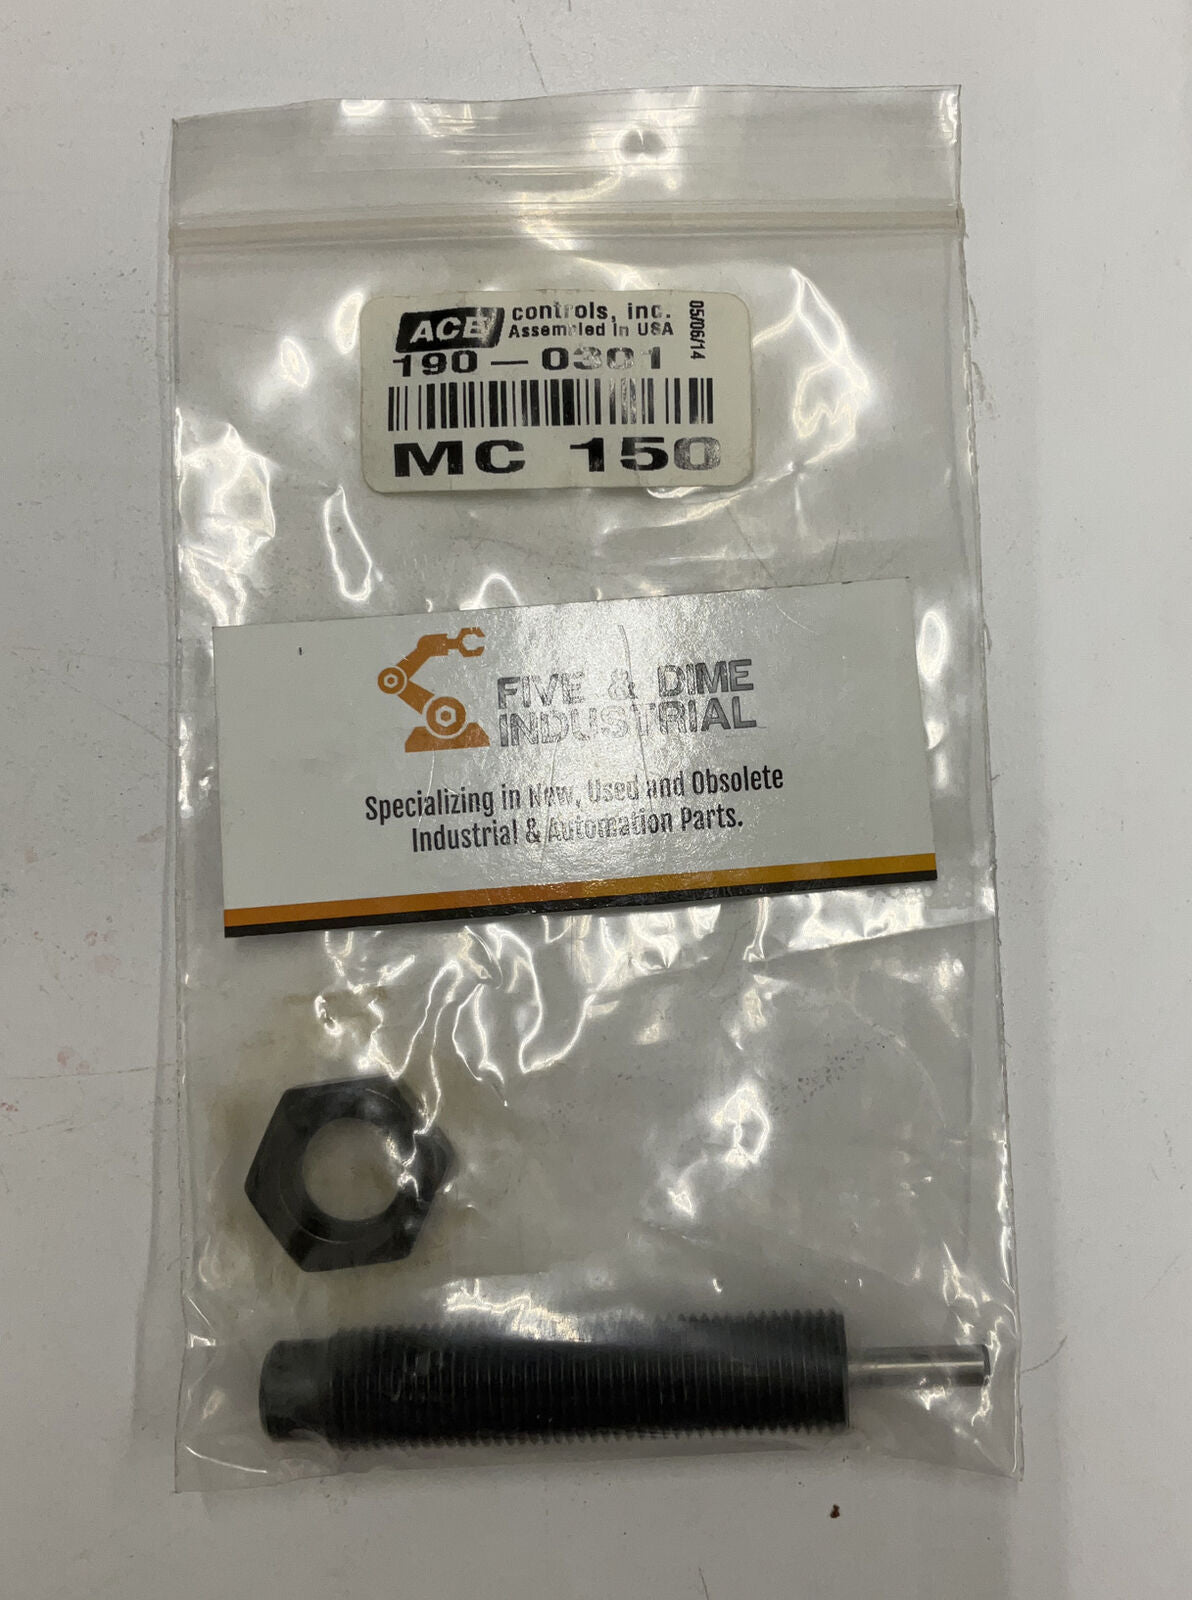 Ace Controls New 190-0301 Shock Absorber MC-15D (CL175)